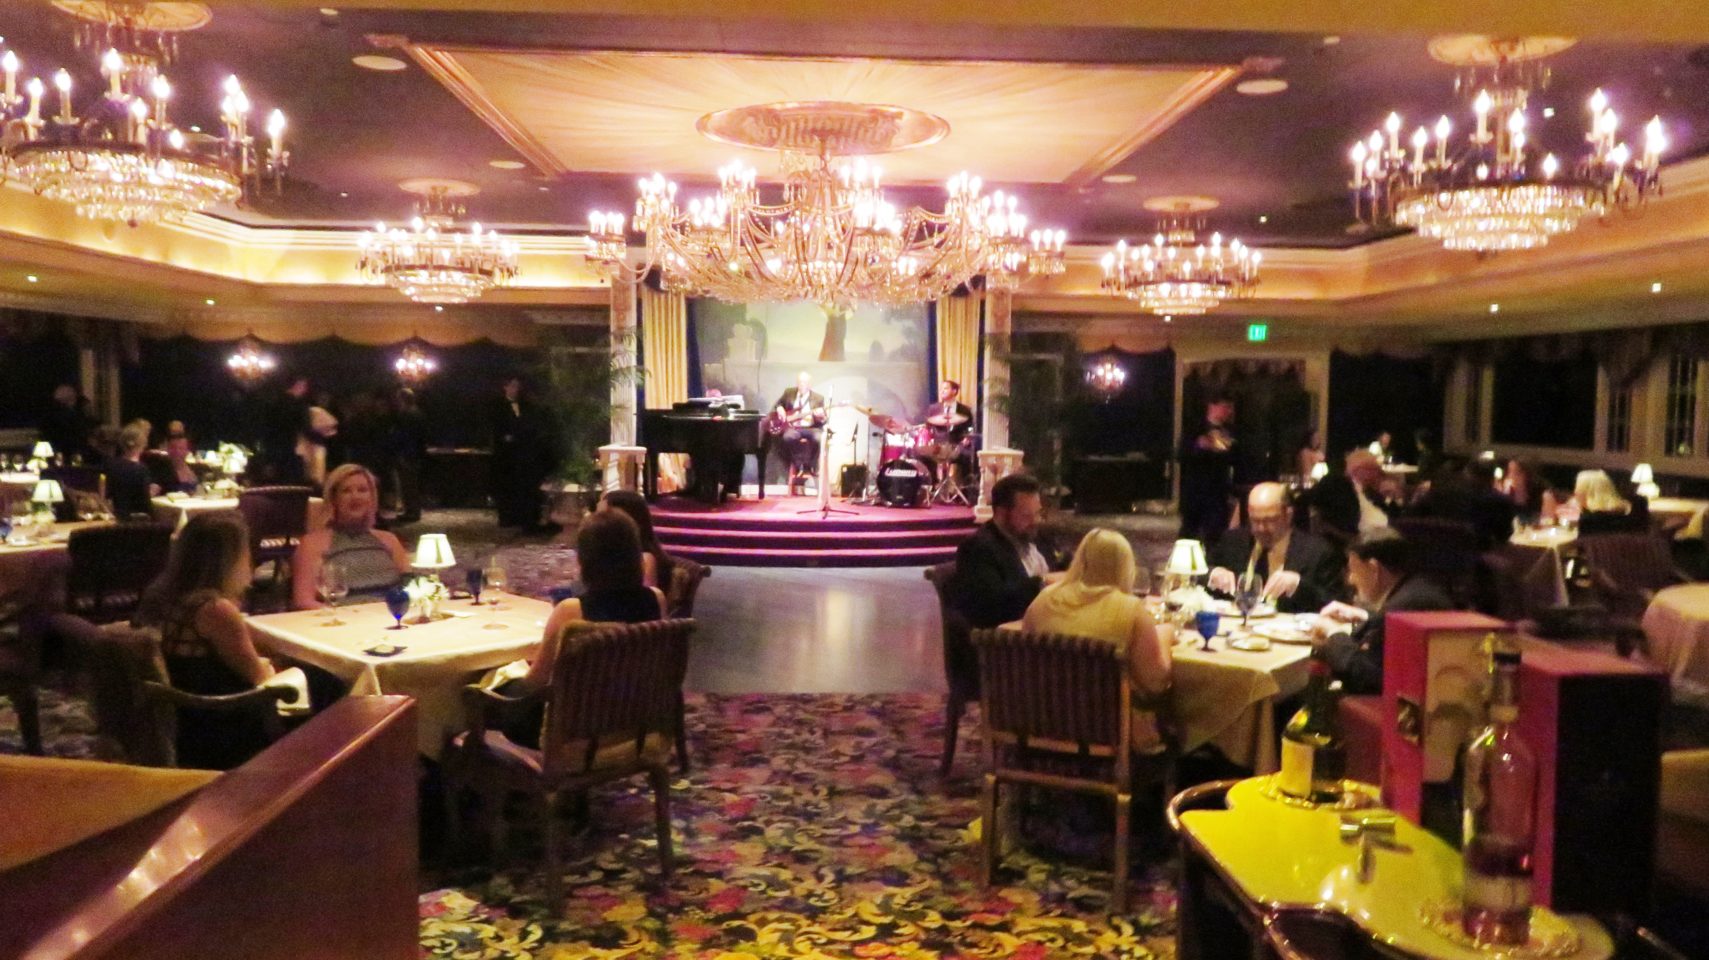 The Penrose Room restaurant at The Broadmoor Resort